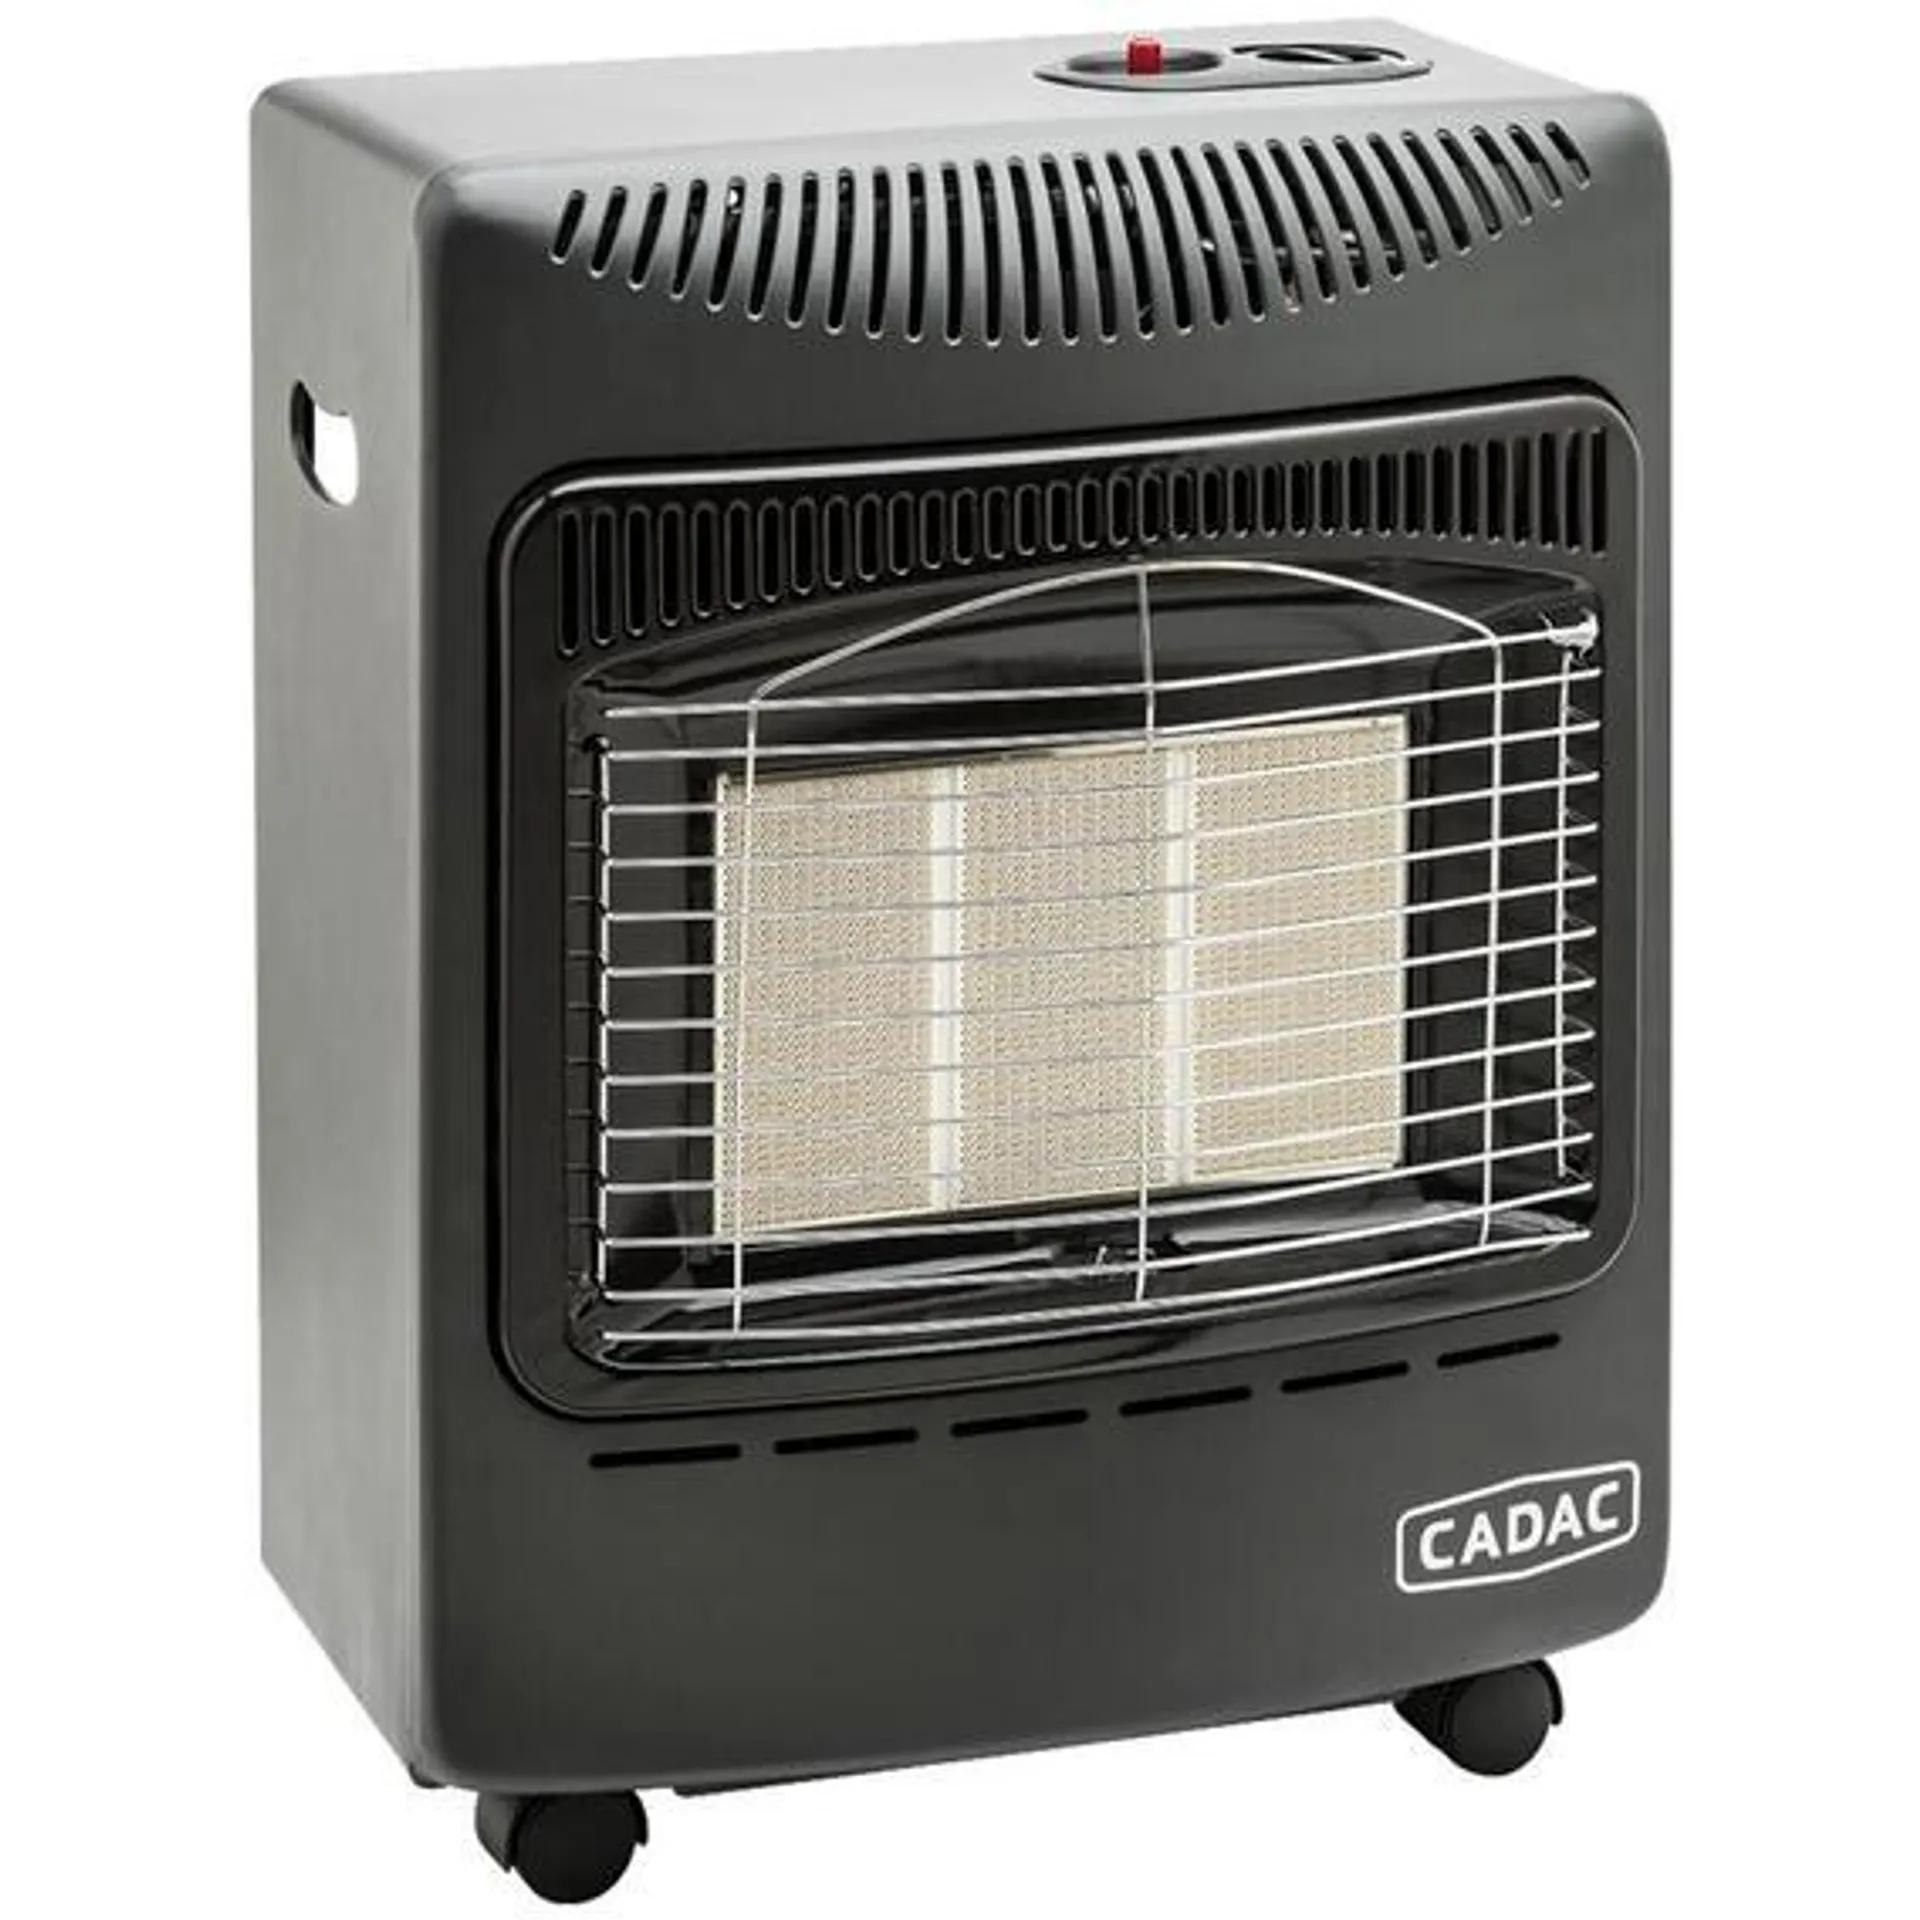 Cadac Compact Gas Heater